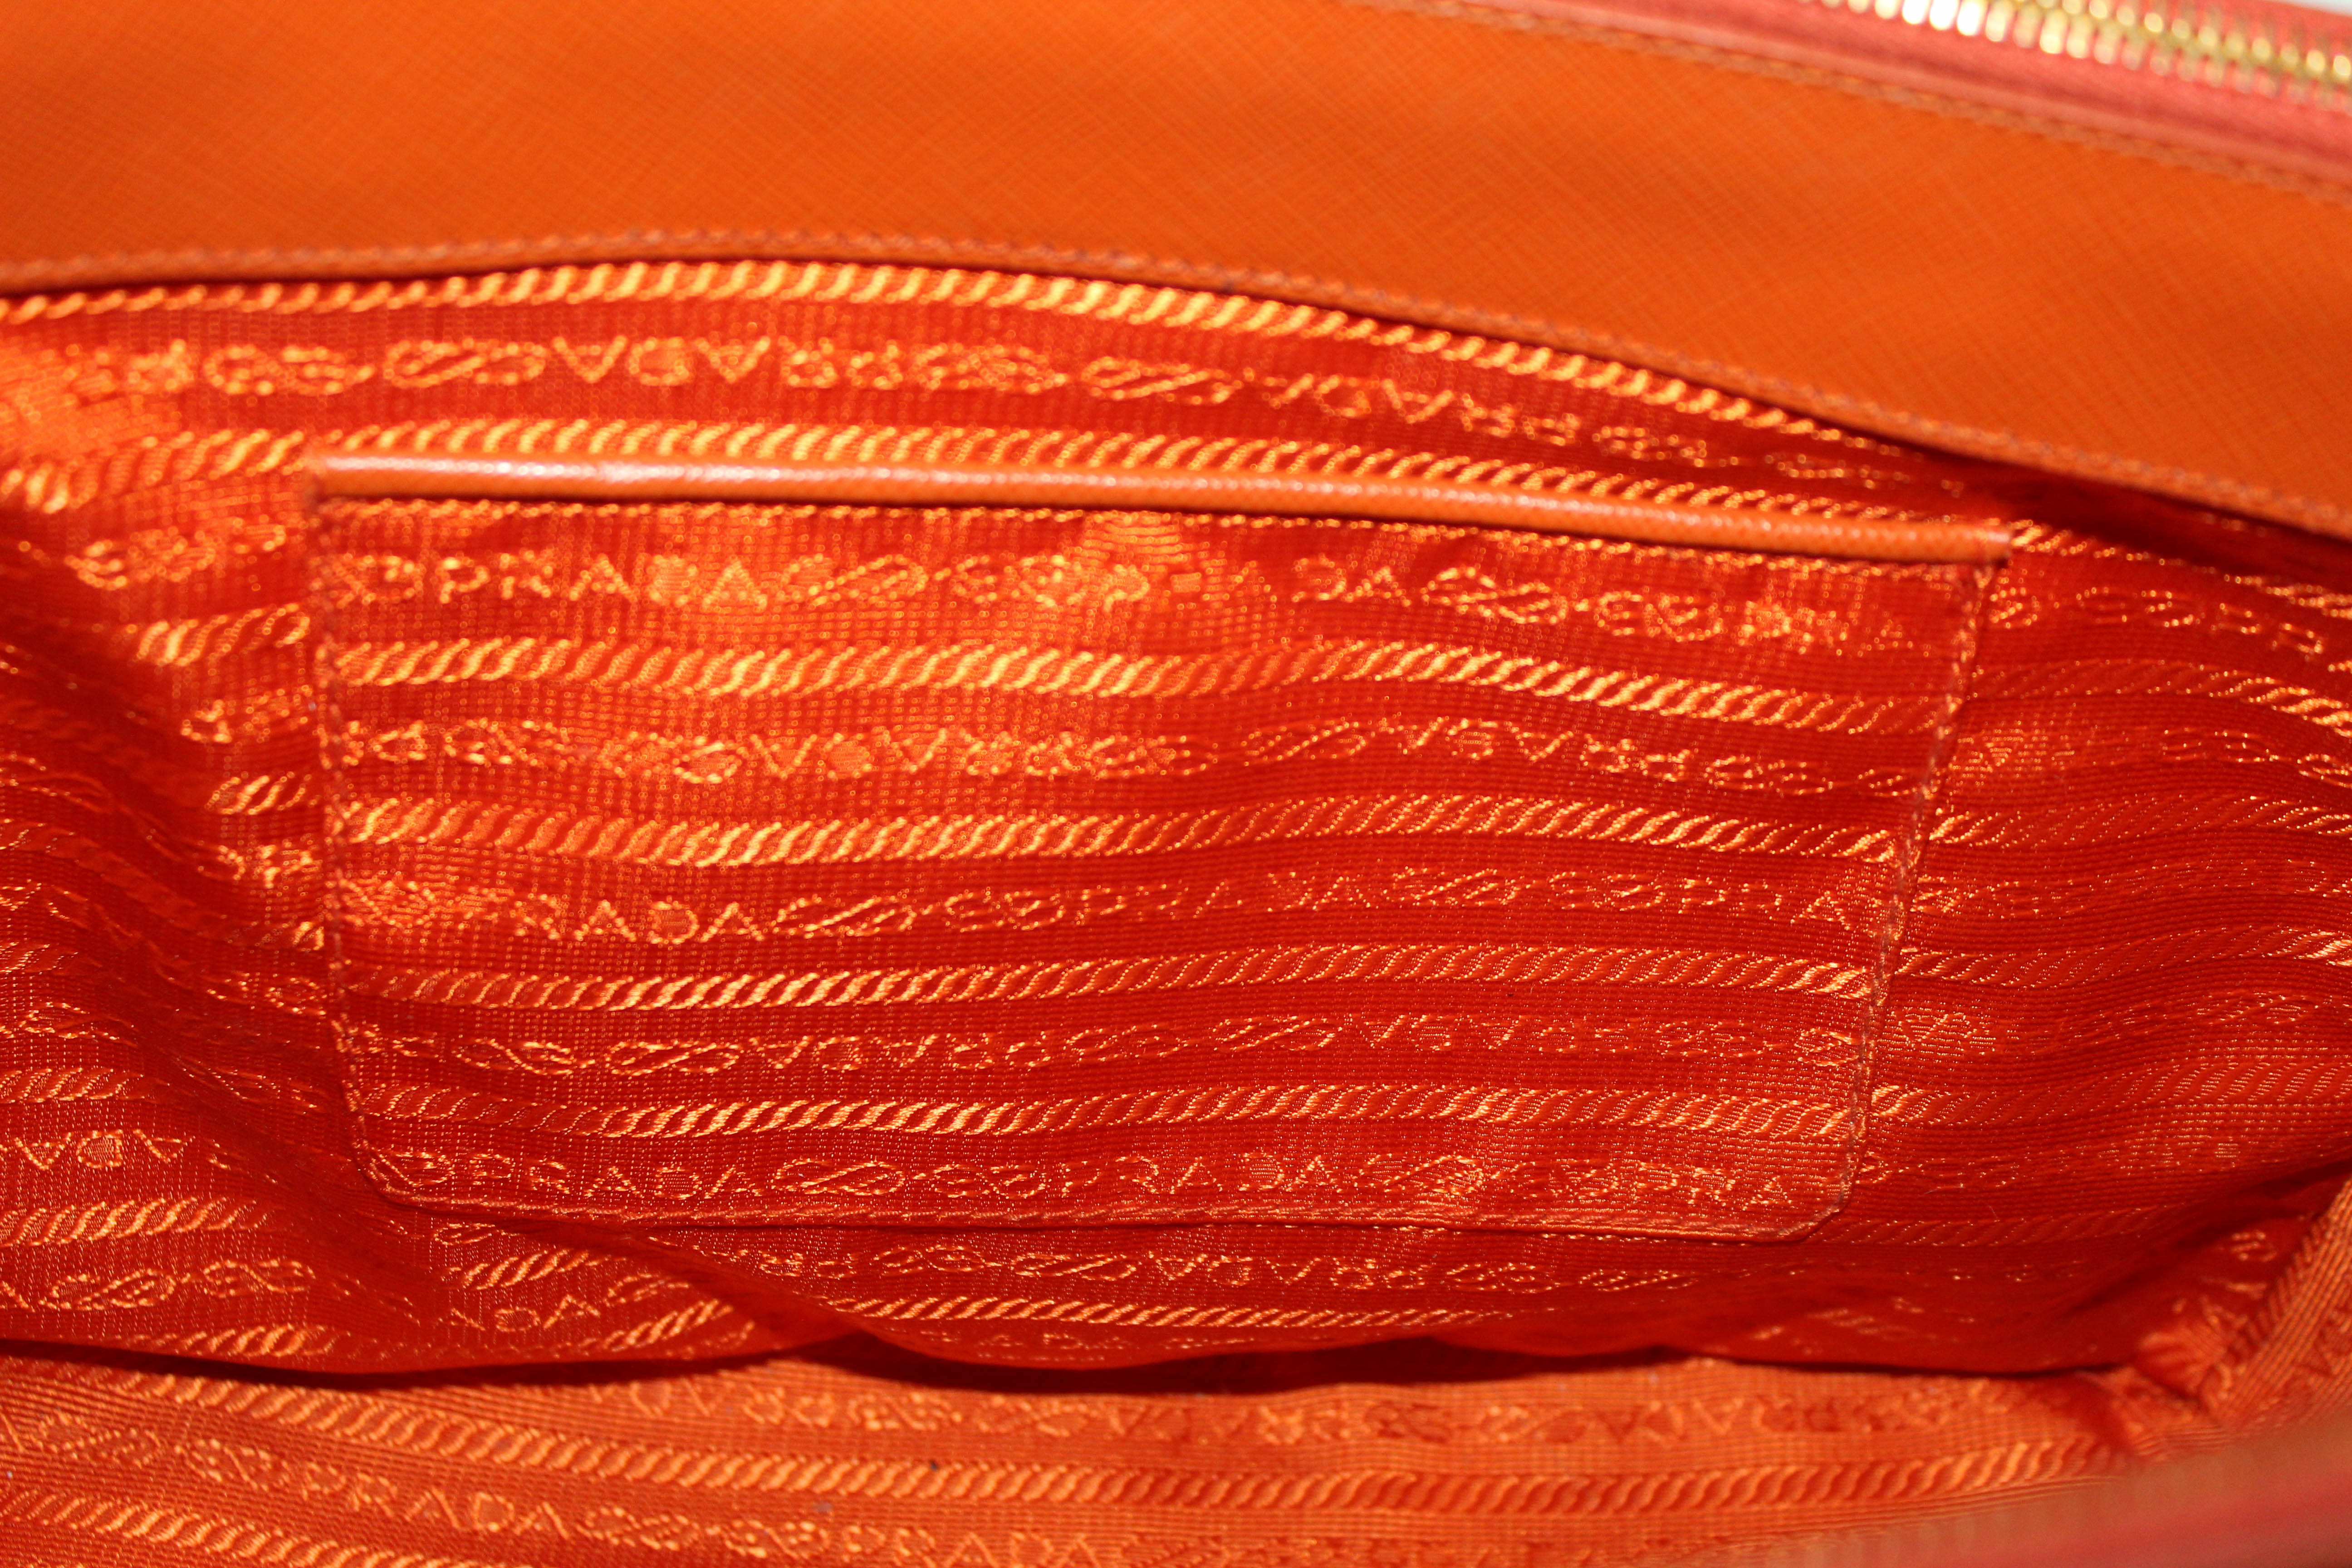 Authentic Prada Orange Saffiano Lux Leather Small Double Zip Tote Bag –  Paris Station Shop